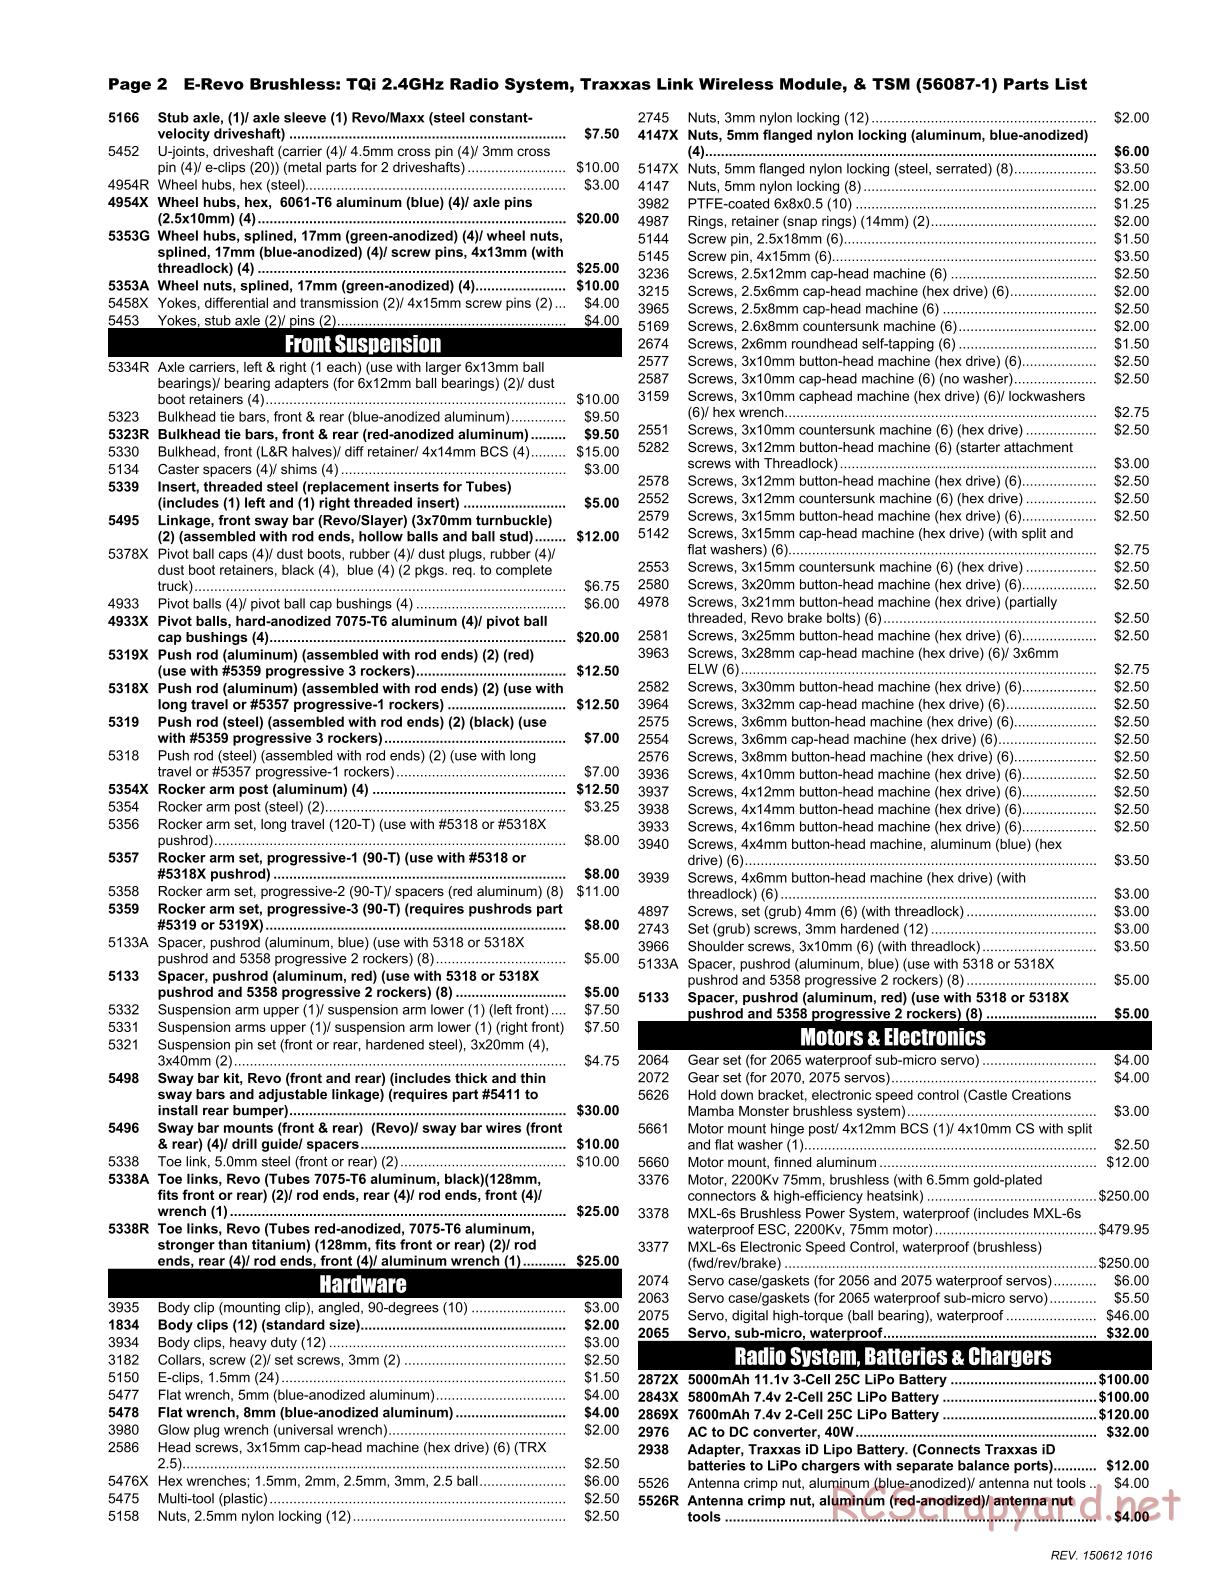 Traxxas - E-Revo Brushless TSM - Parts List - Page 2